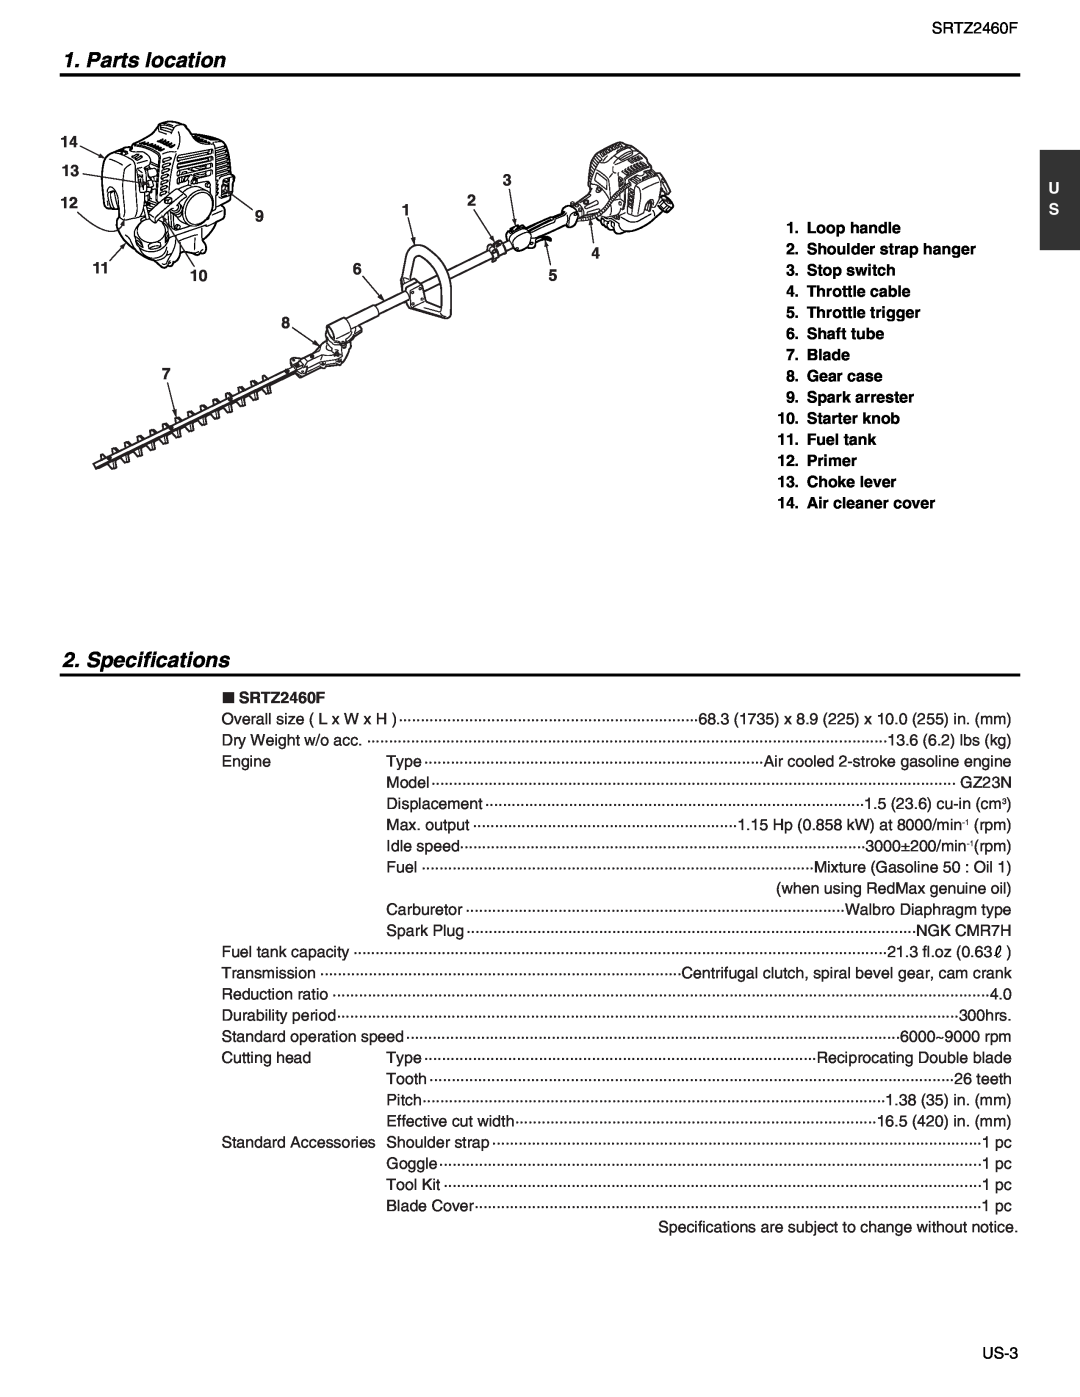 RedMax SRTZ2460F manual Parts location, Specifications 